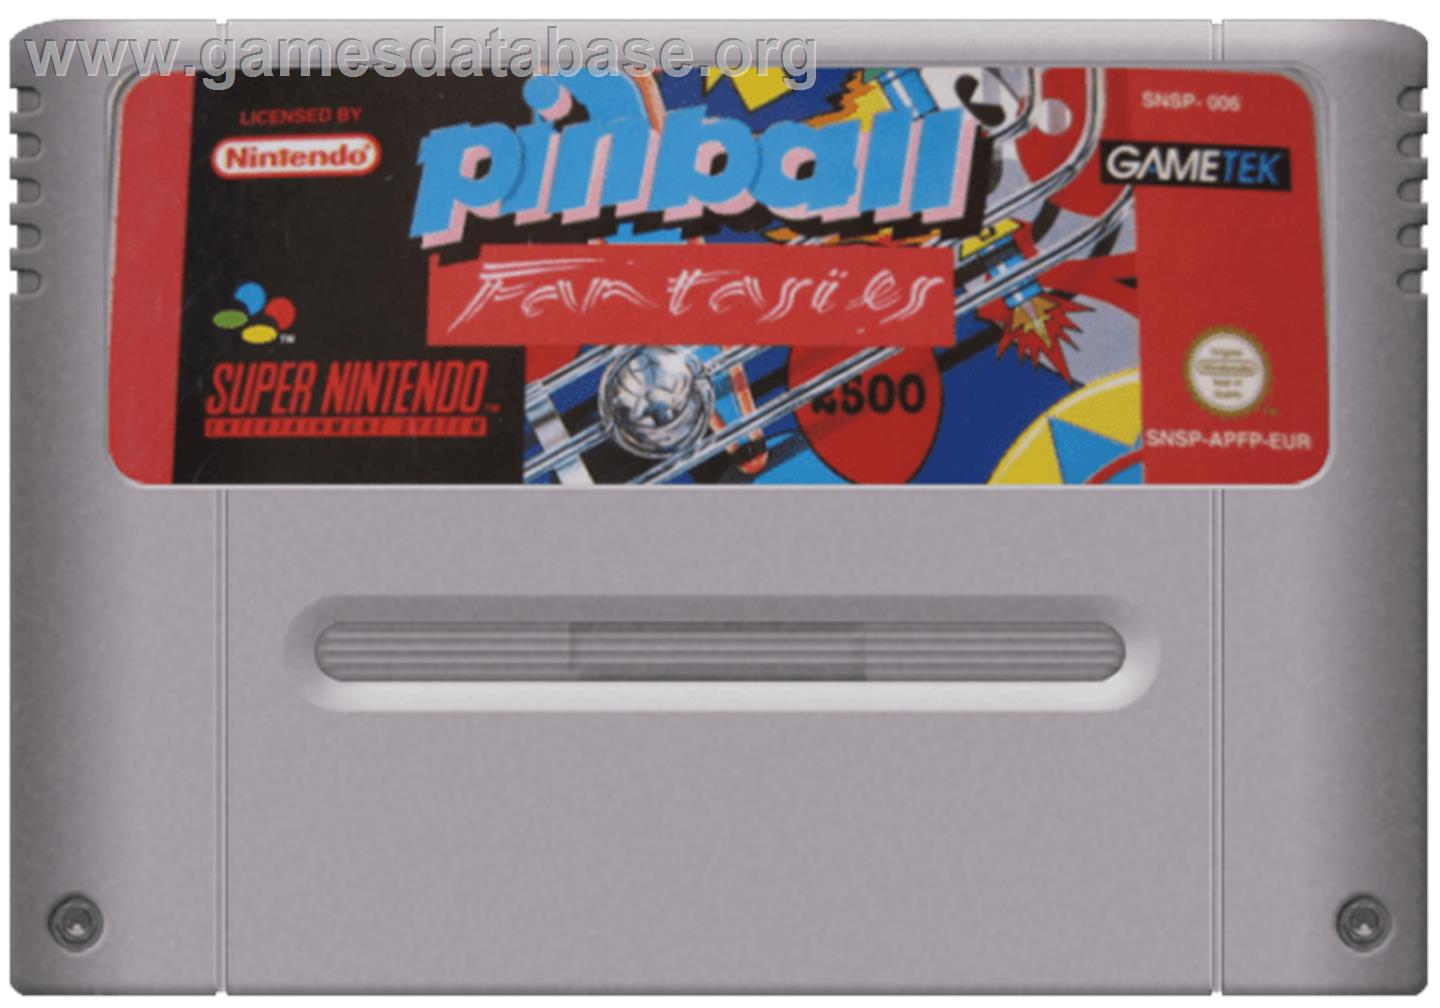 Pinball Fantasies - Nintendo SNES - Artwork - Cartridge